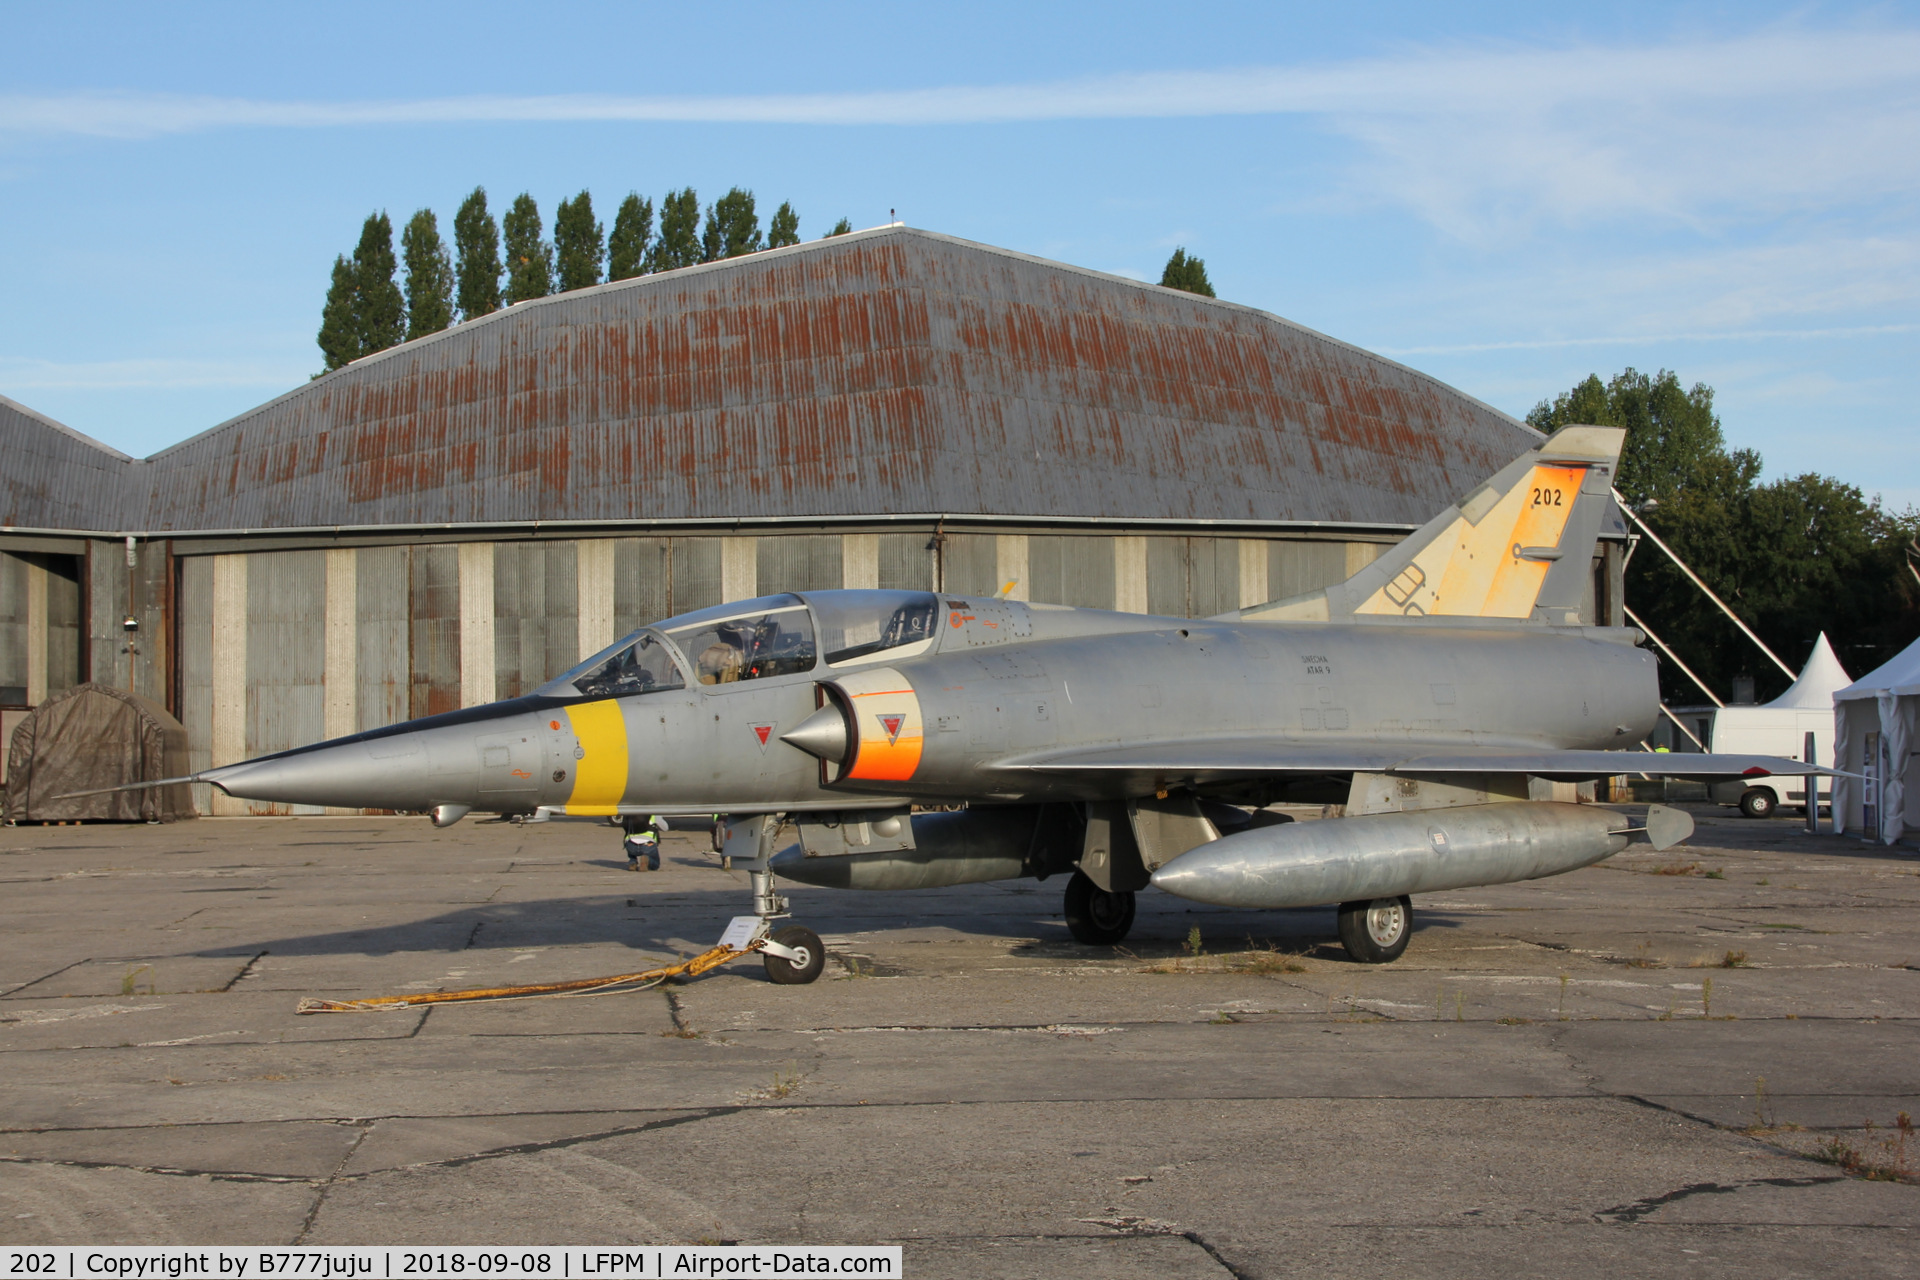 202, Dassault Mirage IIIB C/N 202, at Melun